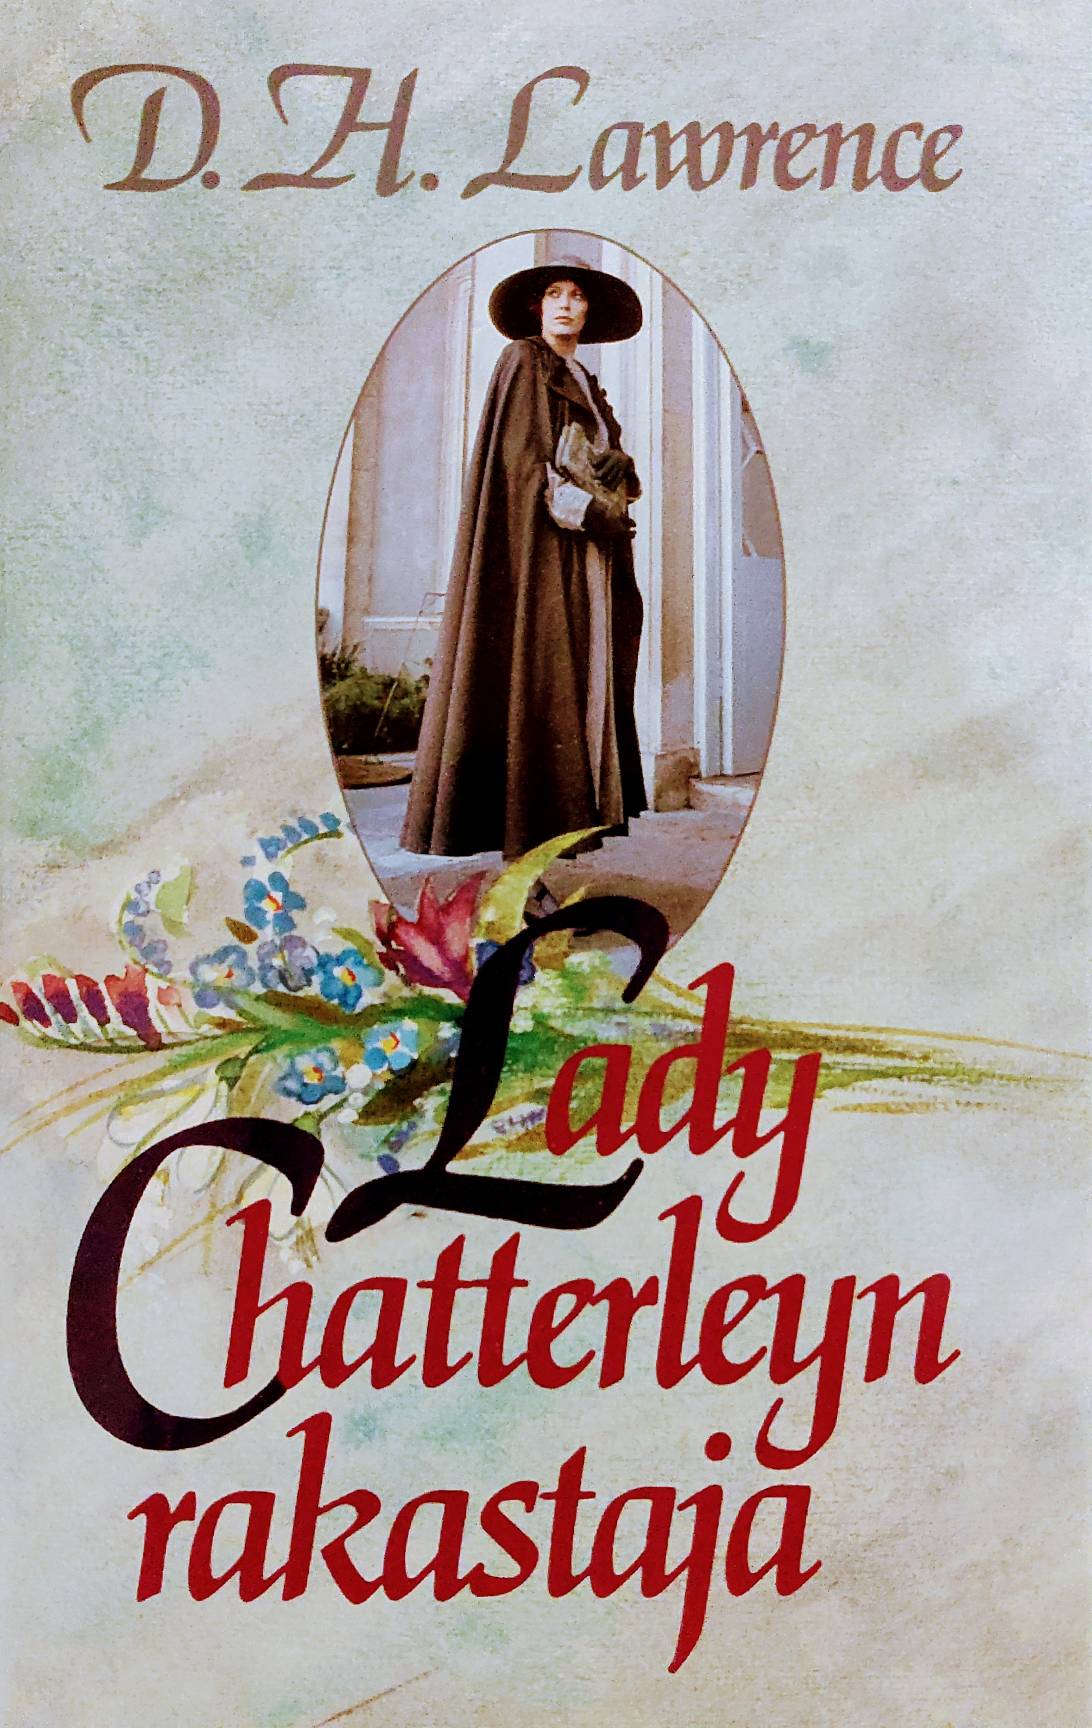 D. H. Lawrence: Lady Chatterleyn rakastaja (Hardcover, Finnish language, 1989, Suuri suomalainen kirjakerho, WSOY)